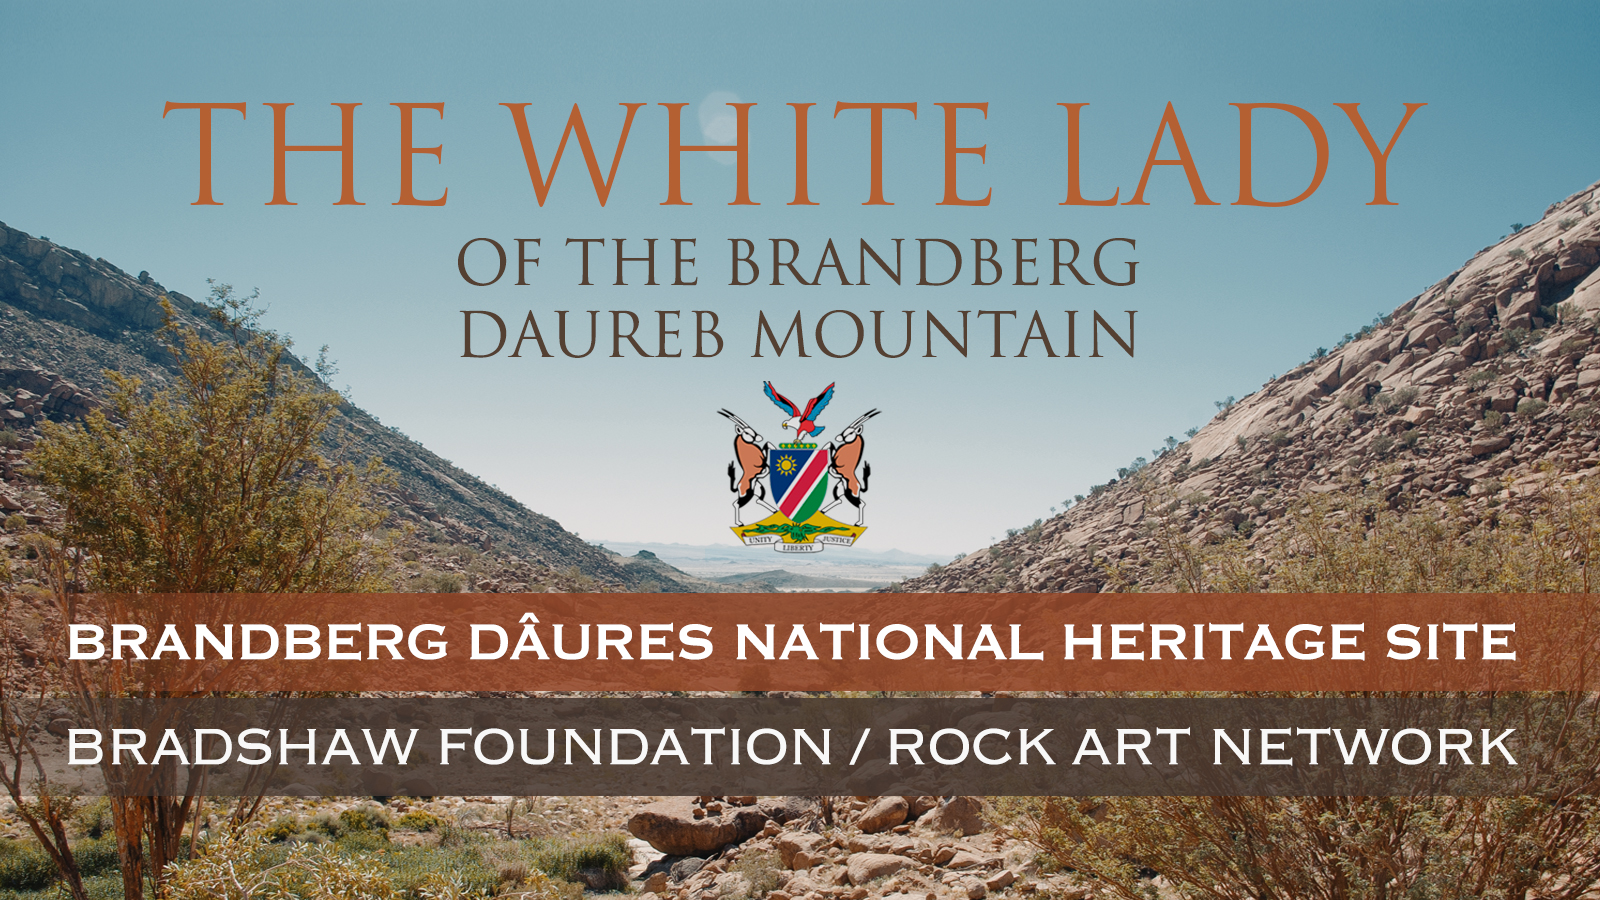 White Lady Rock Art Painting Namibia Africa Archaeology Brandberg Daureb Brandberg Damara Burnt Mountain World Heritage Bradshaw Foundation